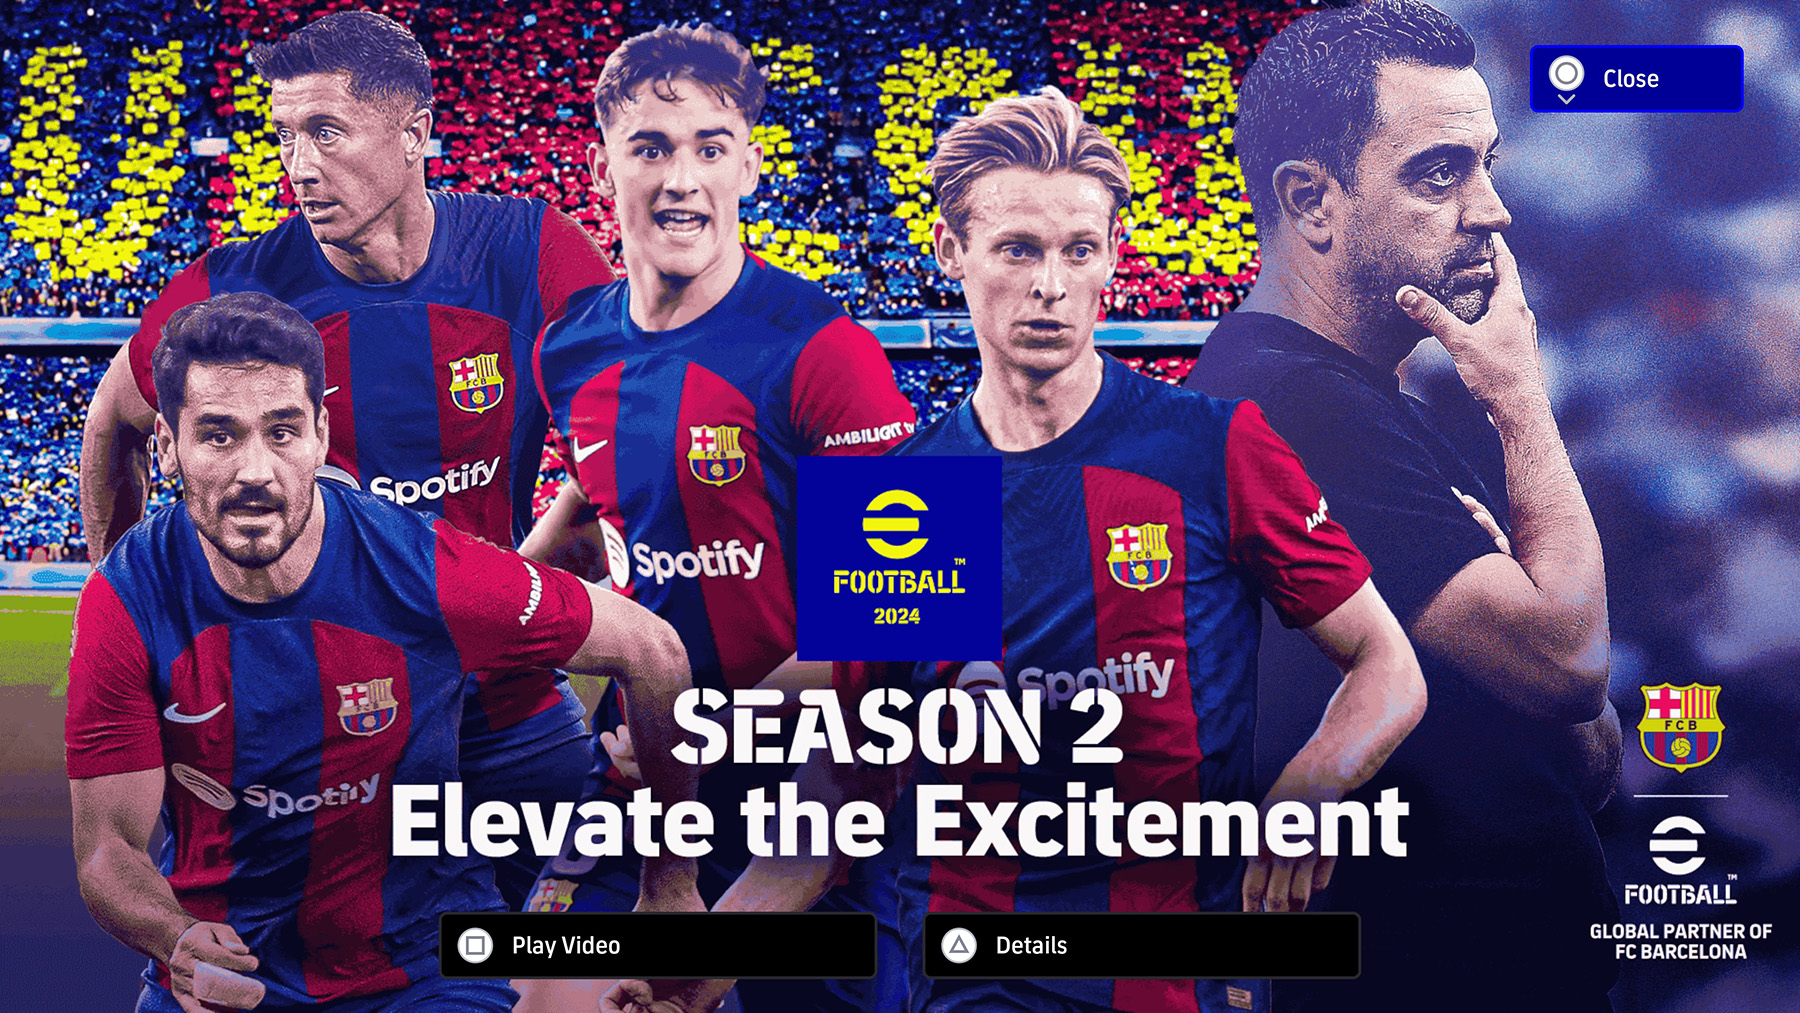 eFootball 2024 Season 2 – Elevate the Excitement